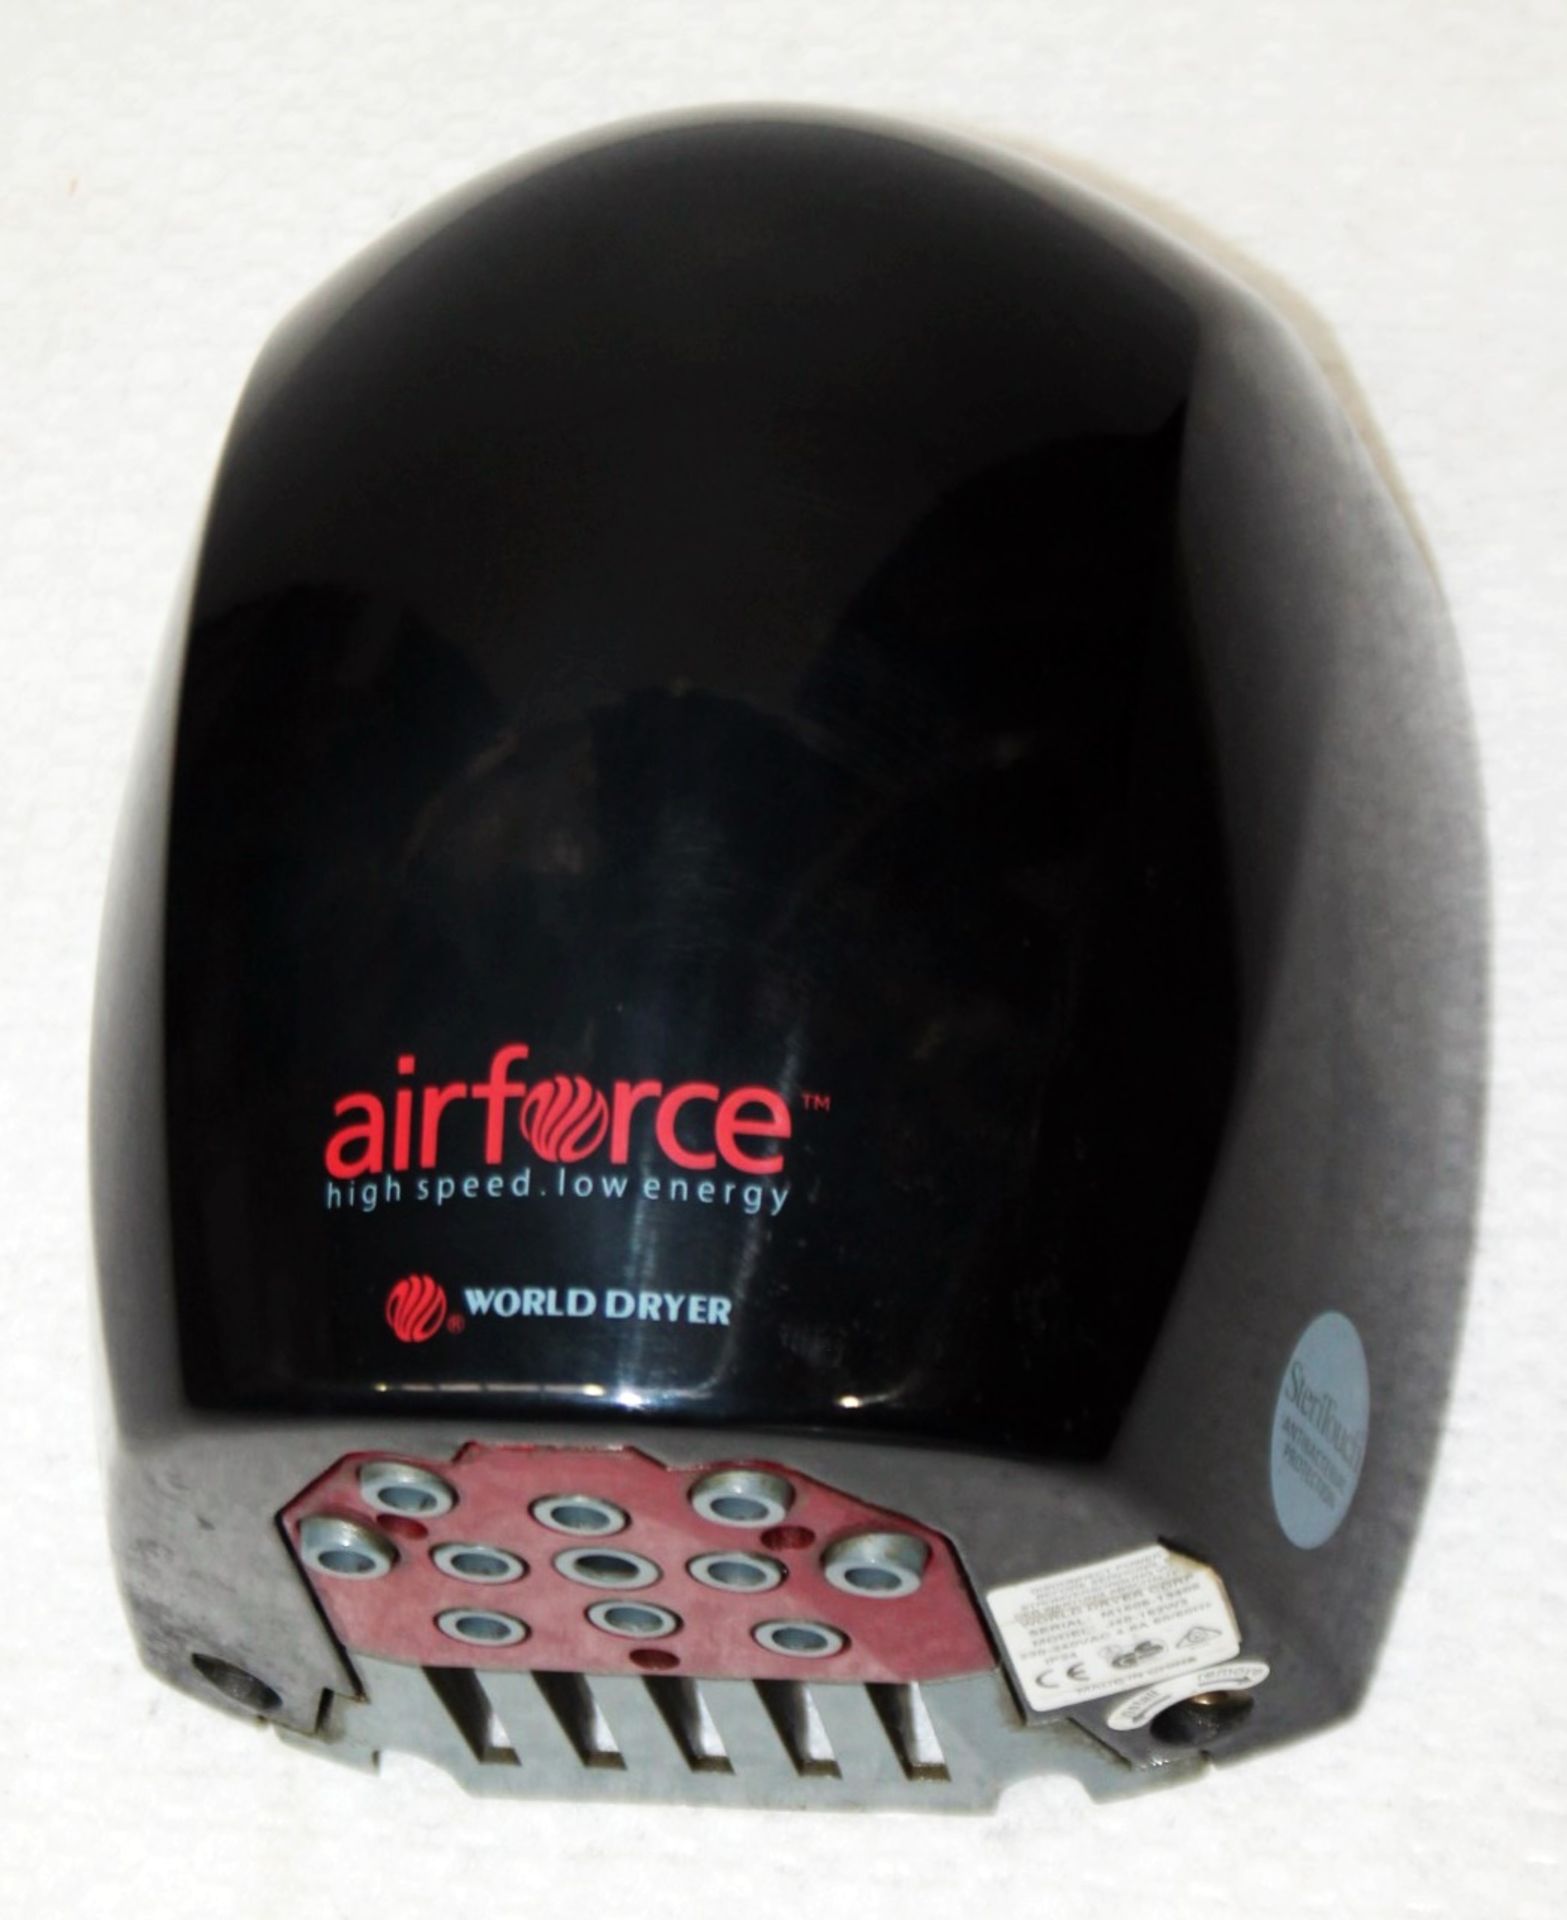 1 x Warner Howard 'Airforce' Commercial Hand Dryer In Black - Original RRP £391.00 - CL805 - - Image 3 of 5